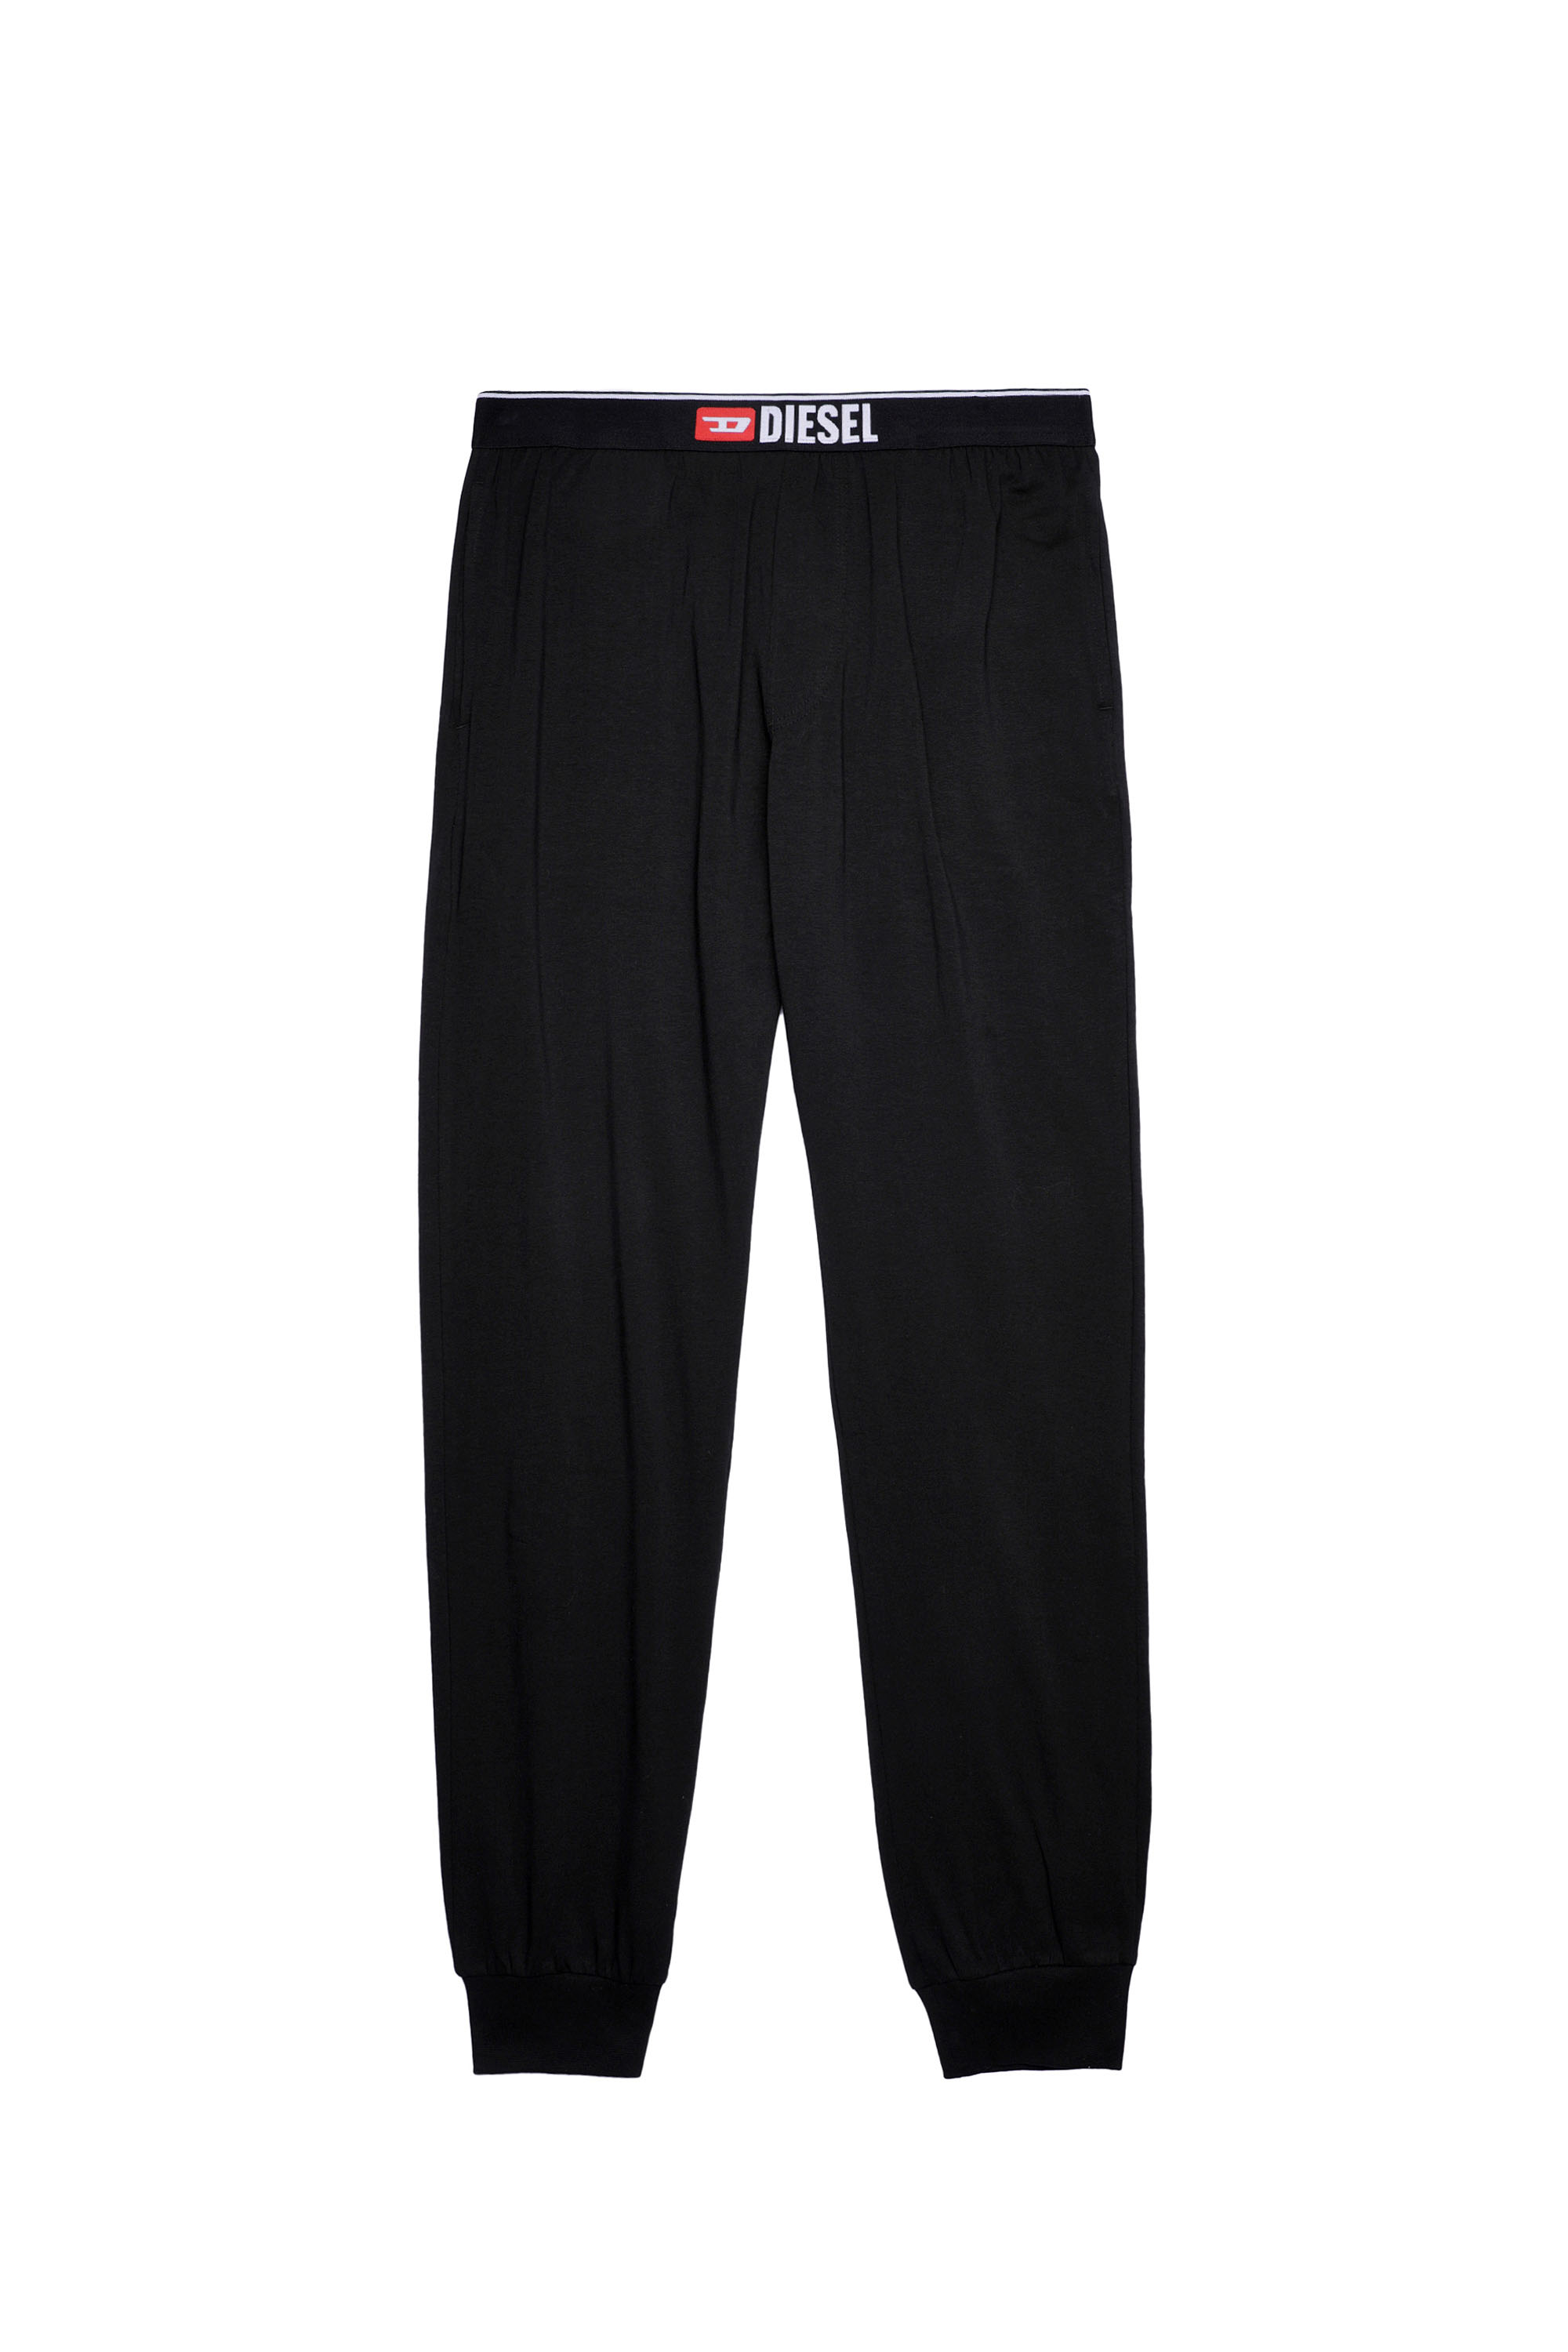 Diesel - Pantaloni pigiama in cotone stretch - Pantaloni - Uomo - Nero